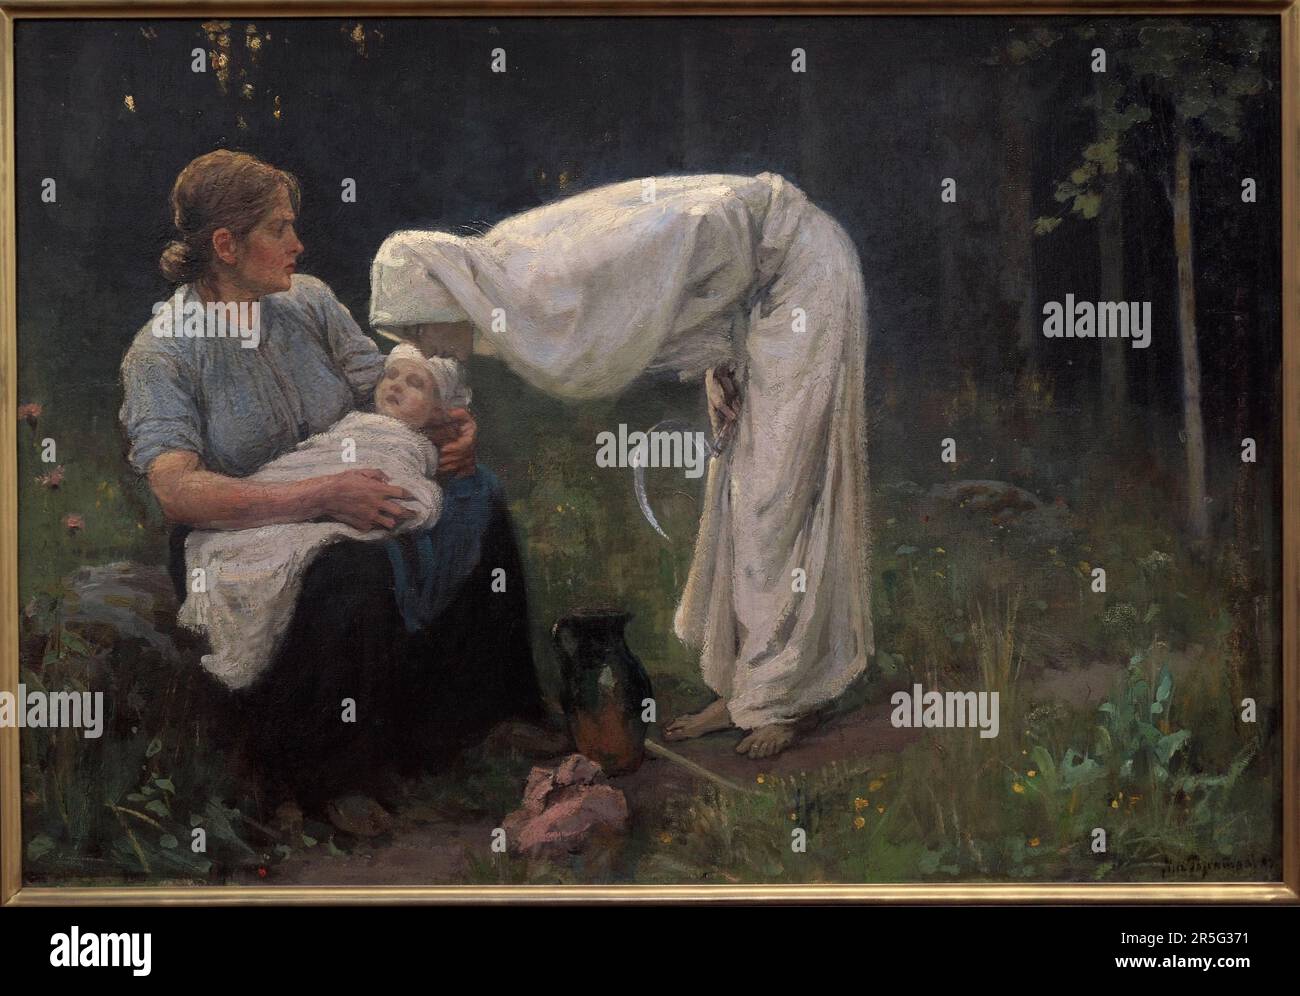 Janis Rozentals (1866-1916). Pintor letón. Muerte, 1897. Óleo sobre lienzo (69 x 98 cm). Museo Nacional de Arte de Letonia Riga, Letonia. Foto de stock